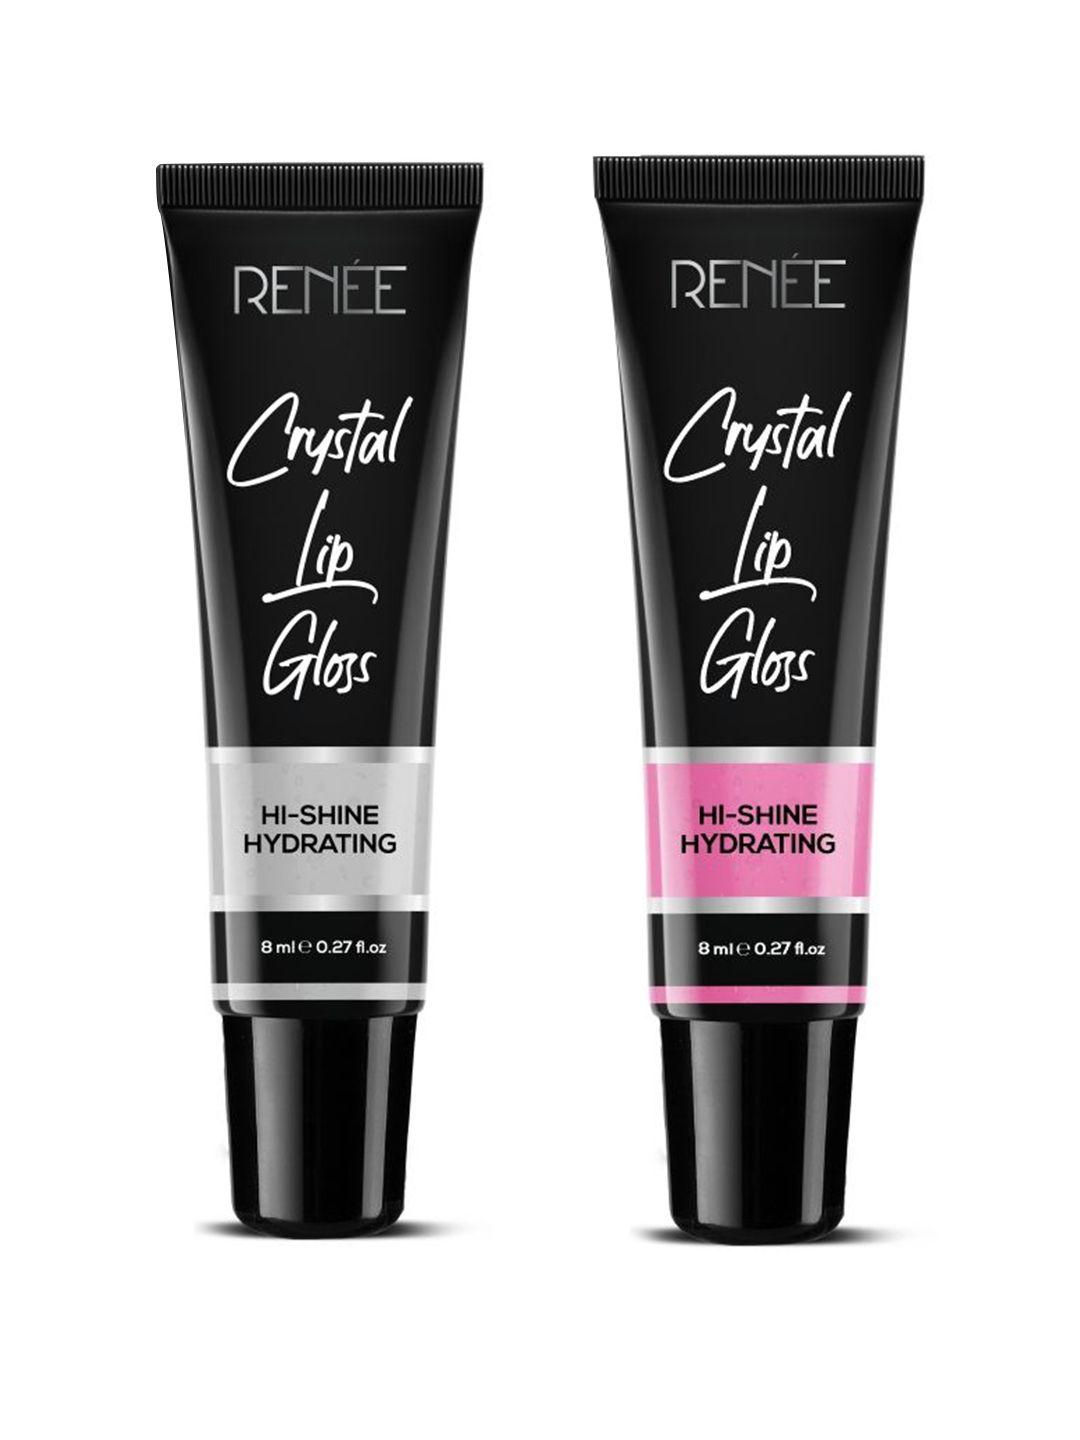 renee crystal hi-shine hydrating lip gloss duo 8ml each - rose quartz 02 & moonstone 01